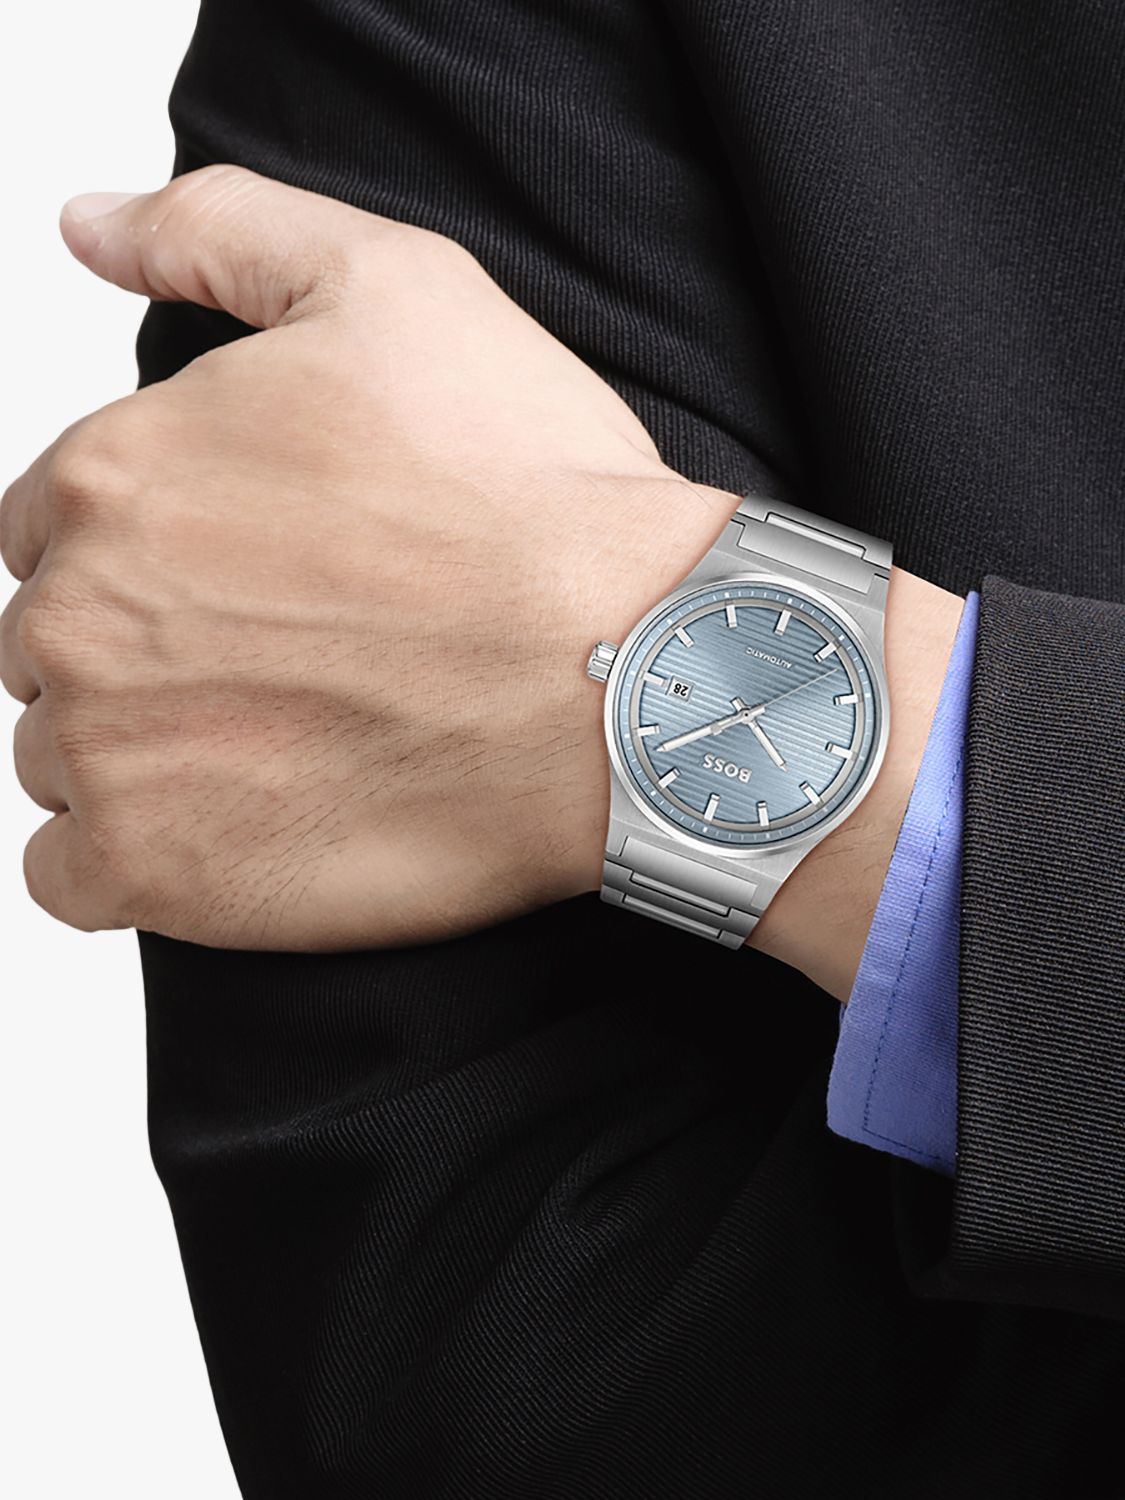 BOSS Men's Candor Automatic Textured Dial Bracelet Strap Watch, Silver/Blue 1514118